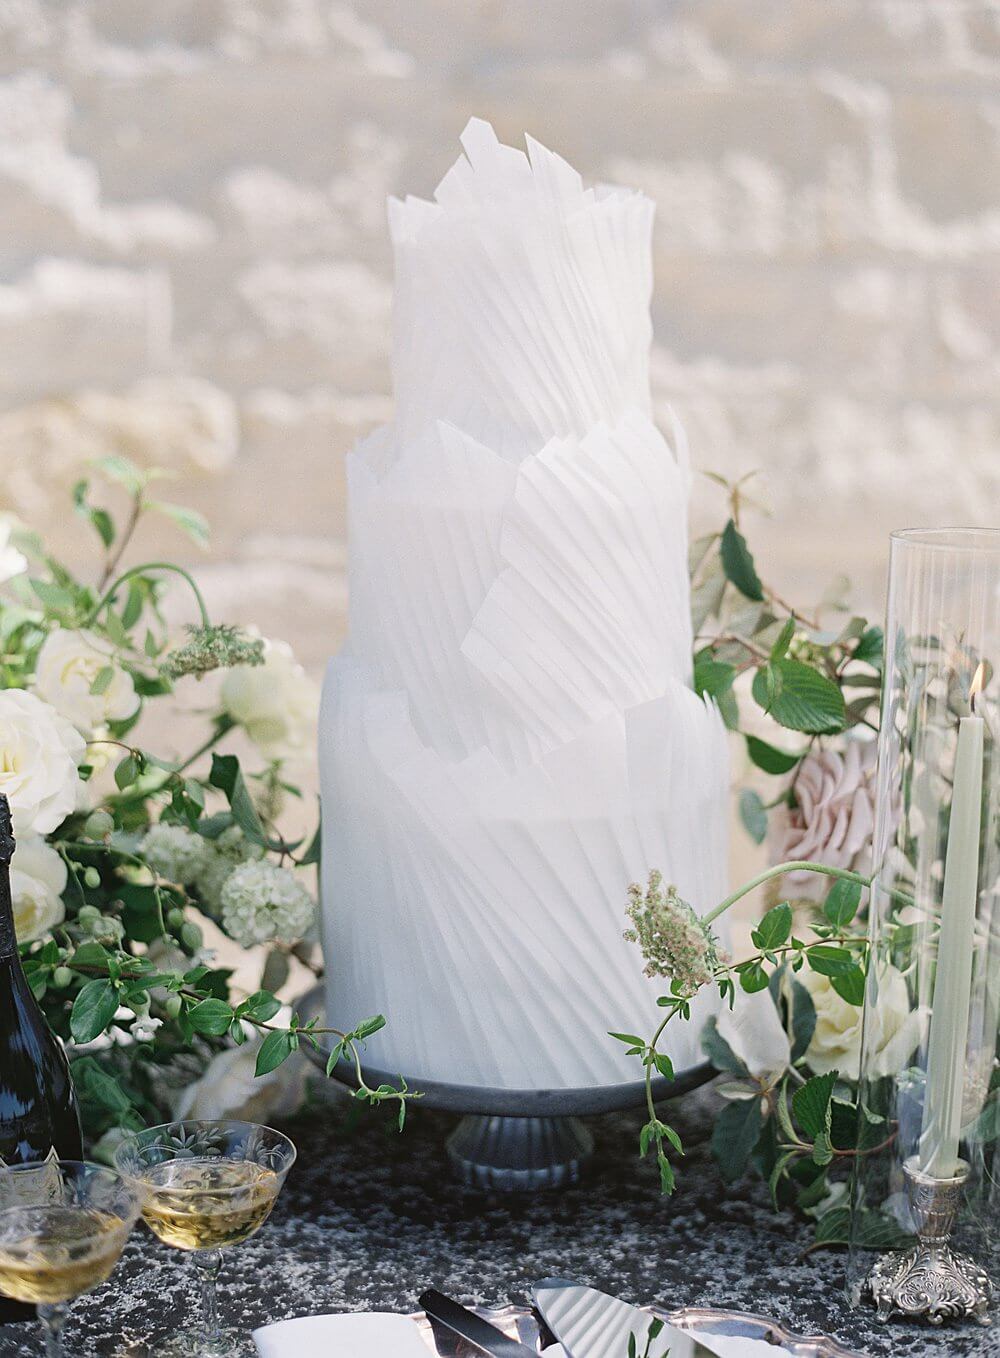 Structural white three tier wedding cake at cal-a-vie wedding - Jacqueline Benét Photography